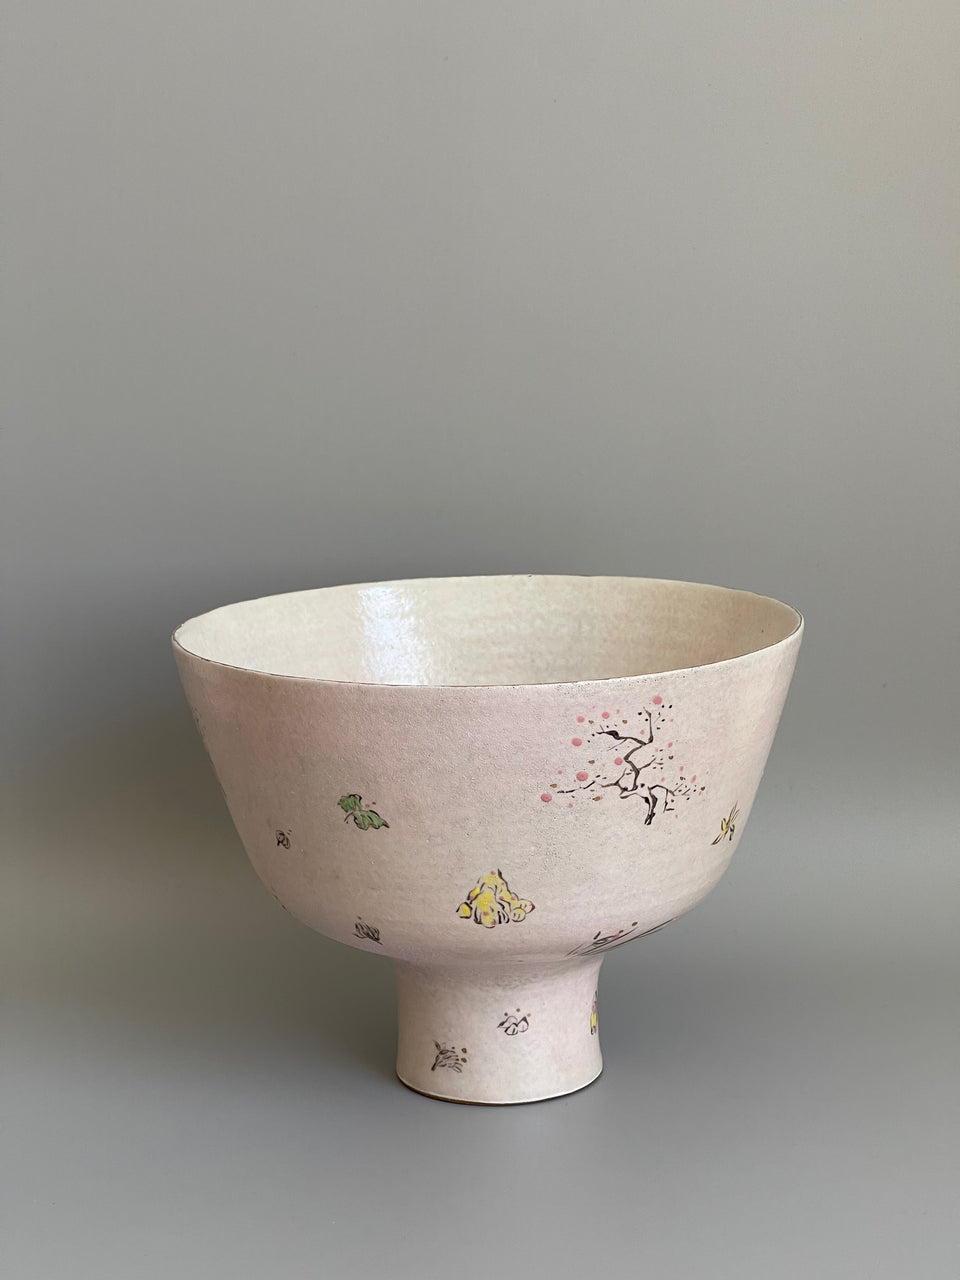 The Garden Vase, Bowl